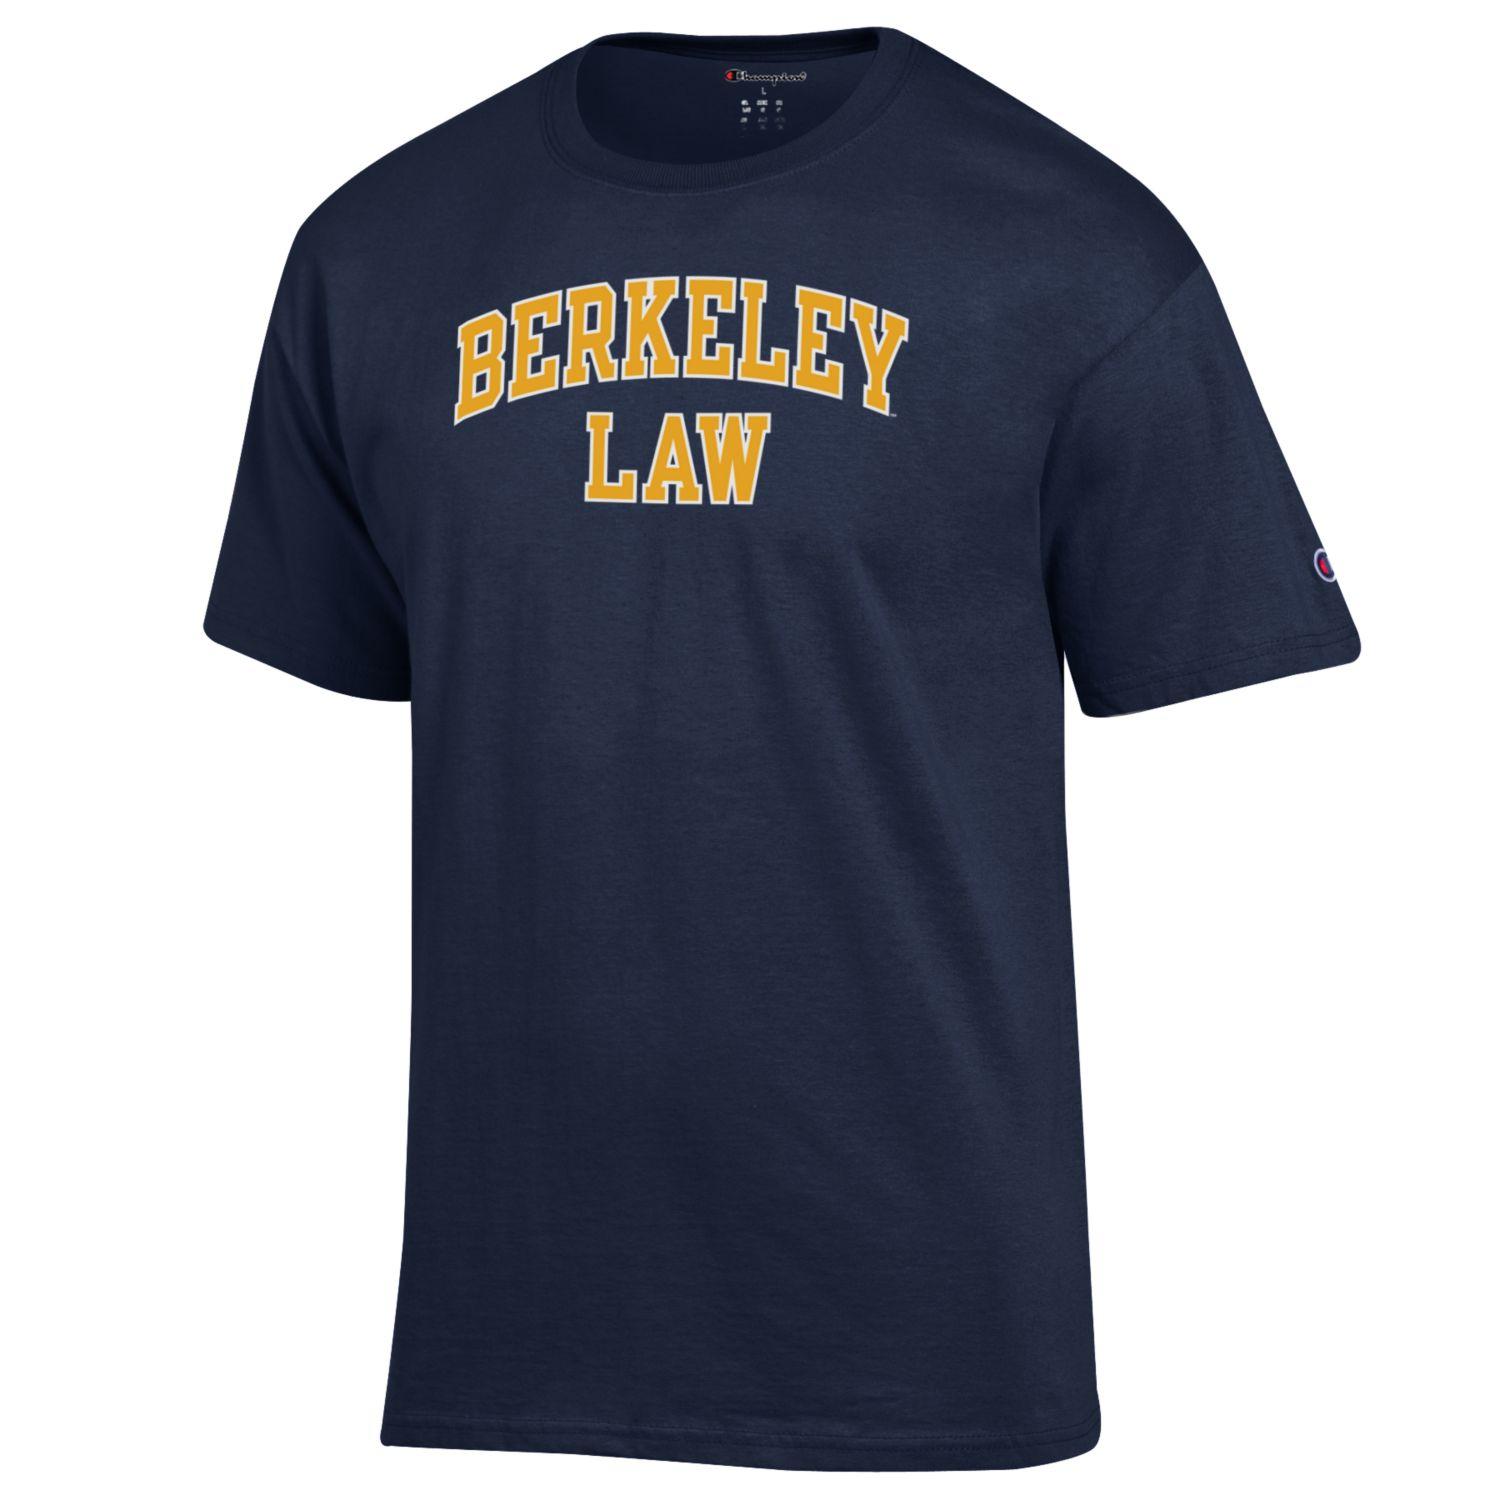 University of California Berkeley arch & Law T-shirt-Navy-Shop College Wear